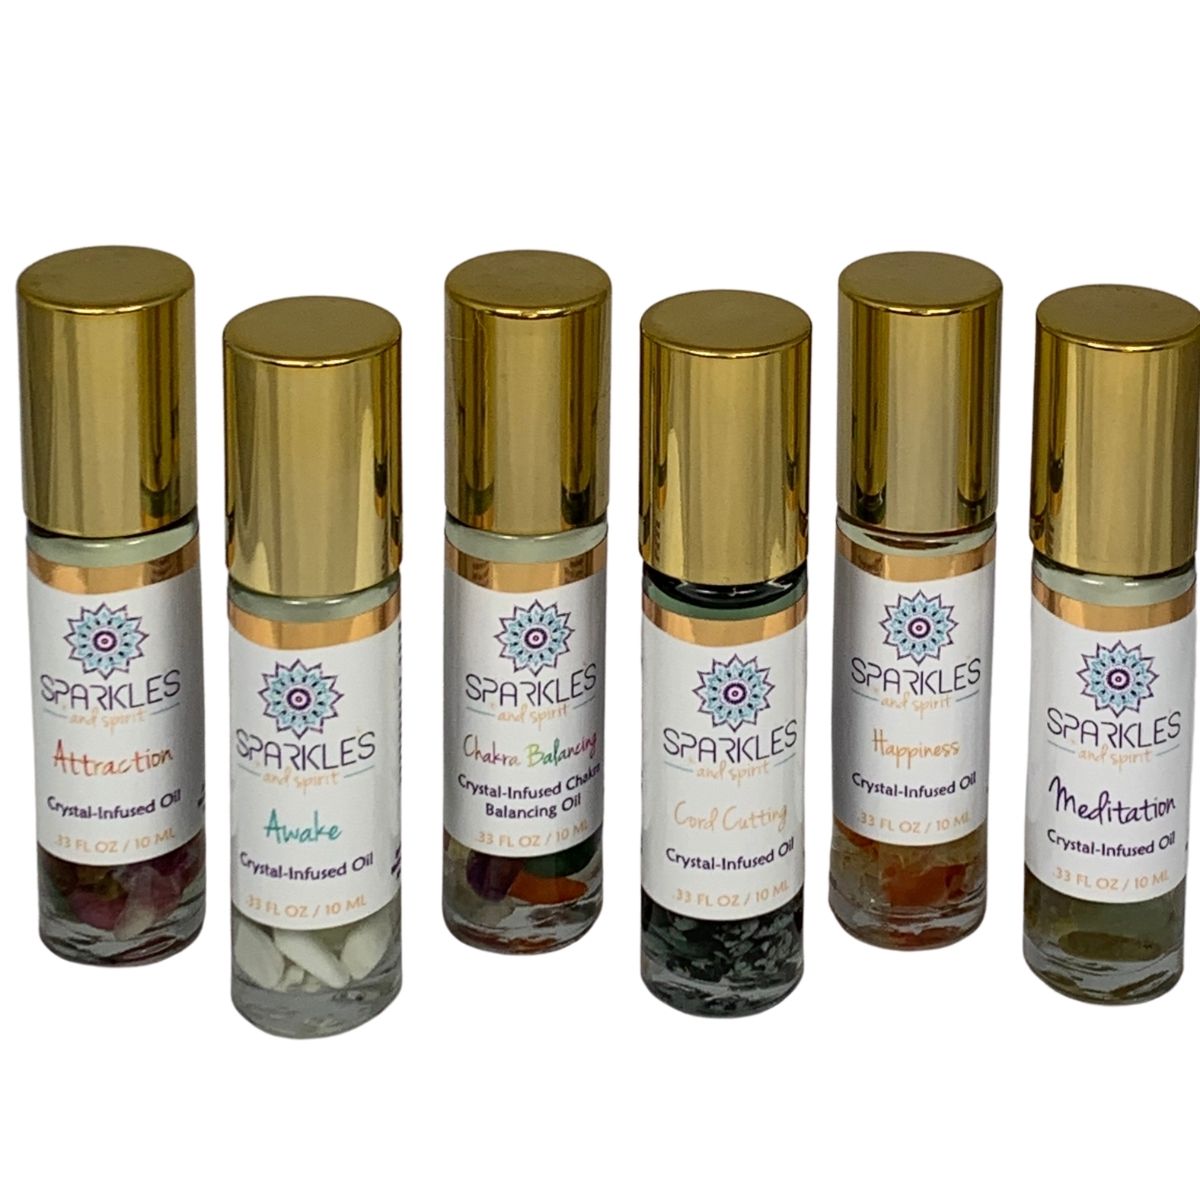 Set of 6 Crystal-Infused Oils